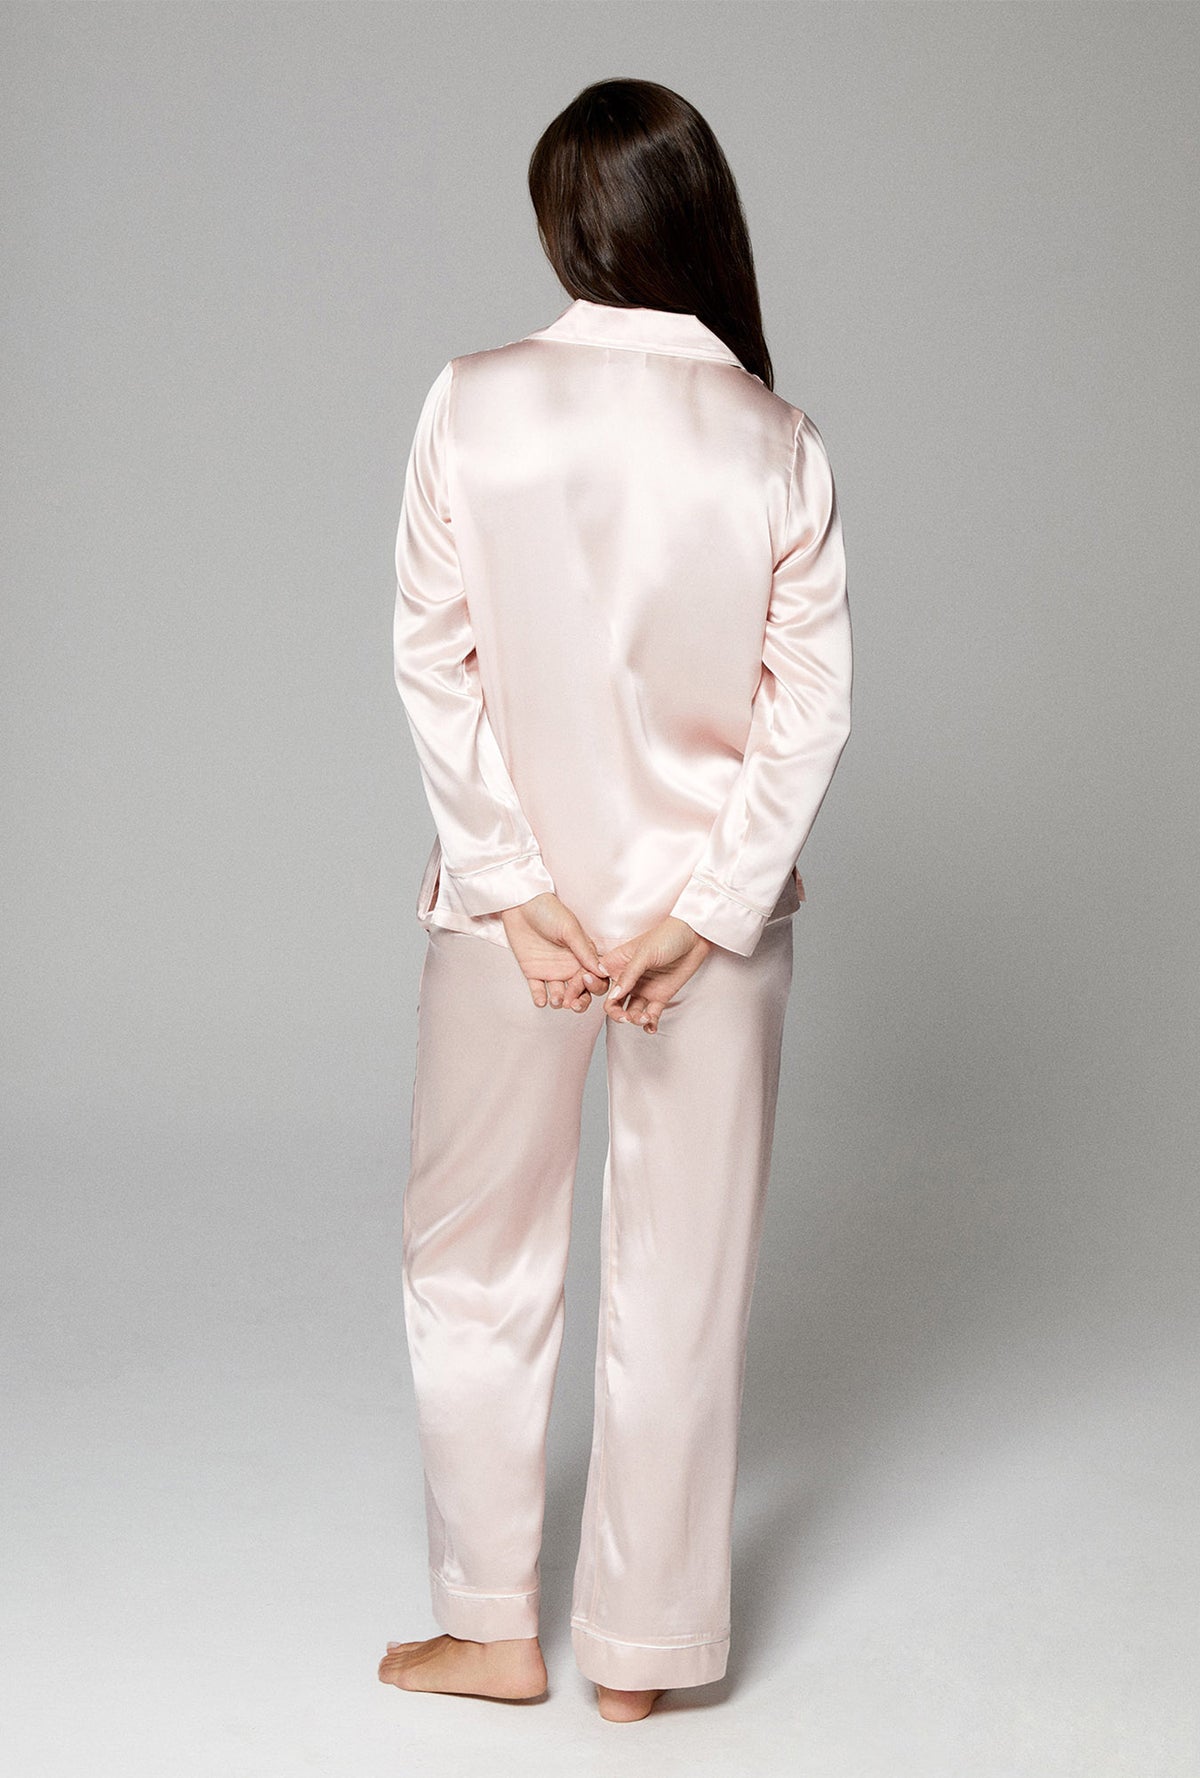 A lady wearing pink long sleeve classic pj set